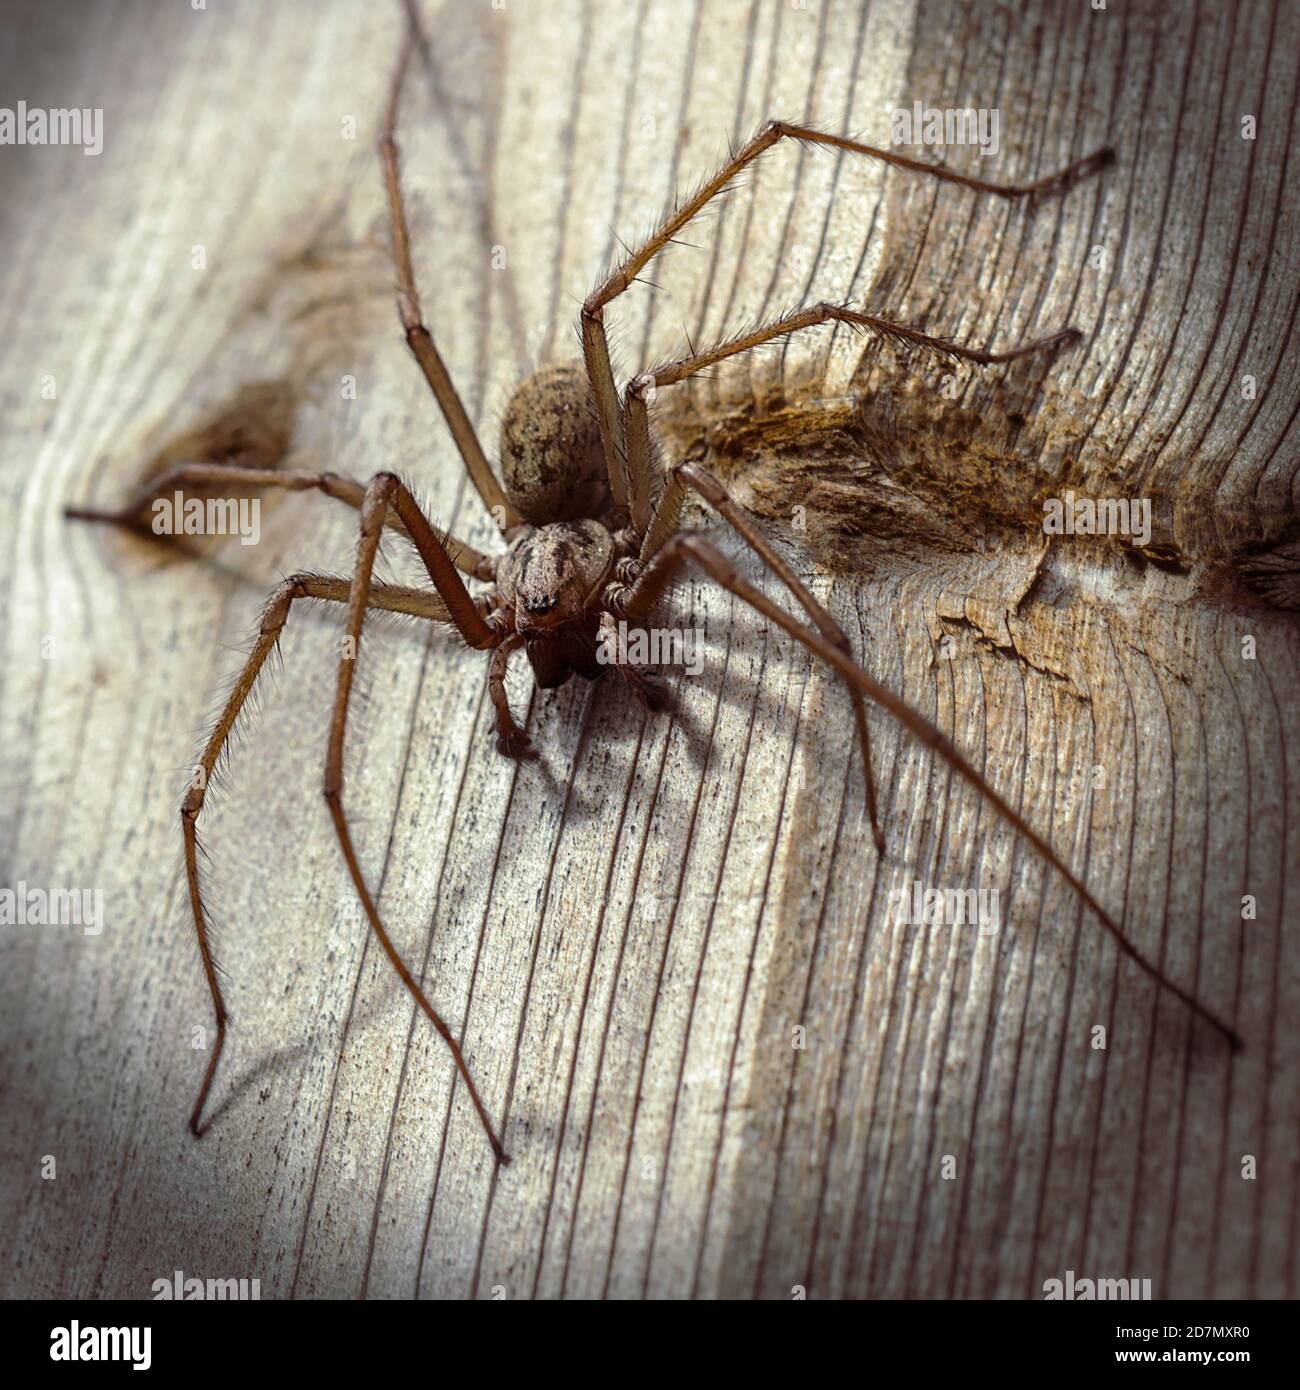 Tegenaria sp. Spider, hombre, Escocia. Fotografiado sobre fondo de madera Foto de stock